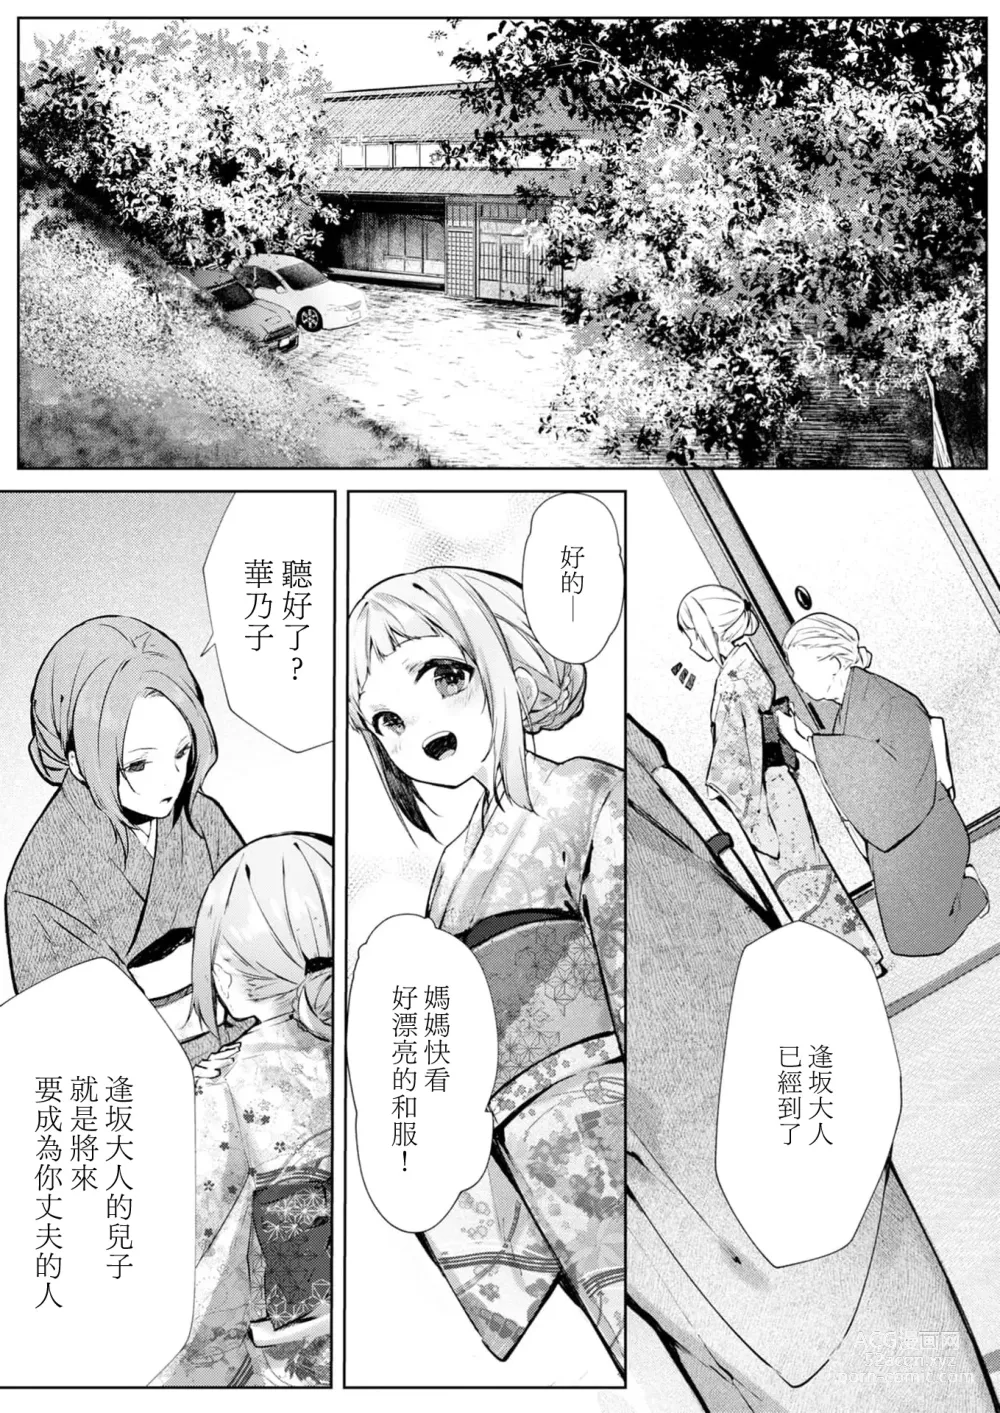 Page 2 of manga 与极致温柔丈夫的新婚生活并不如意 1-2